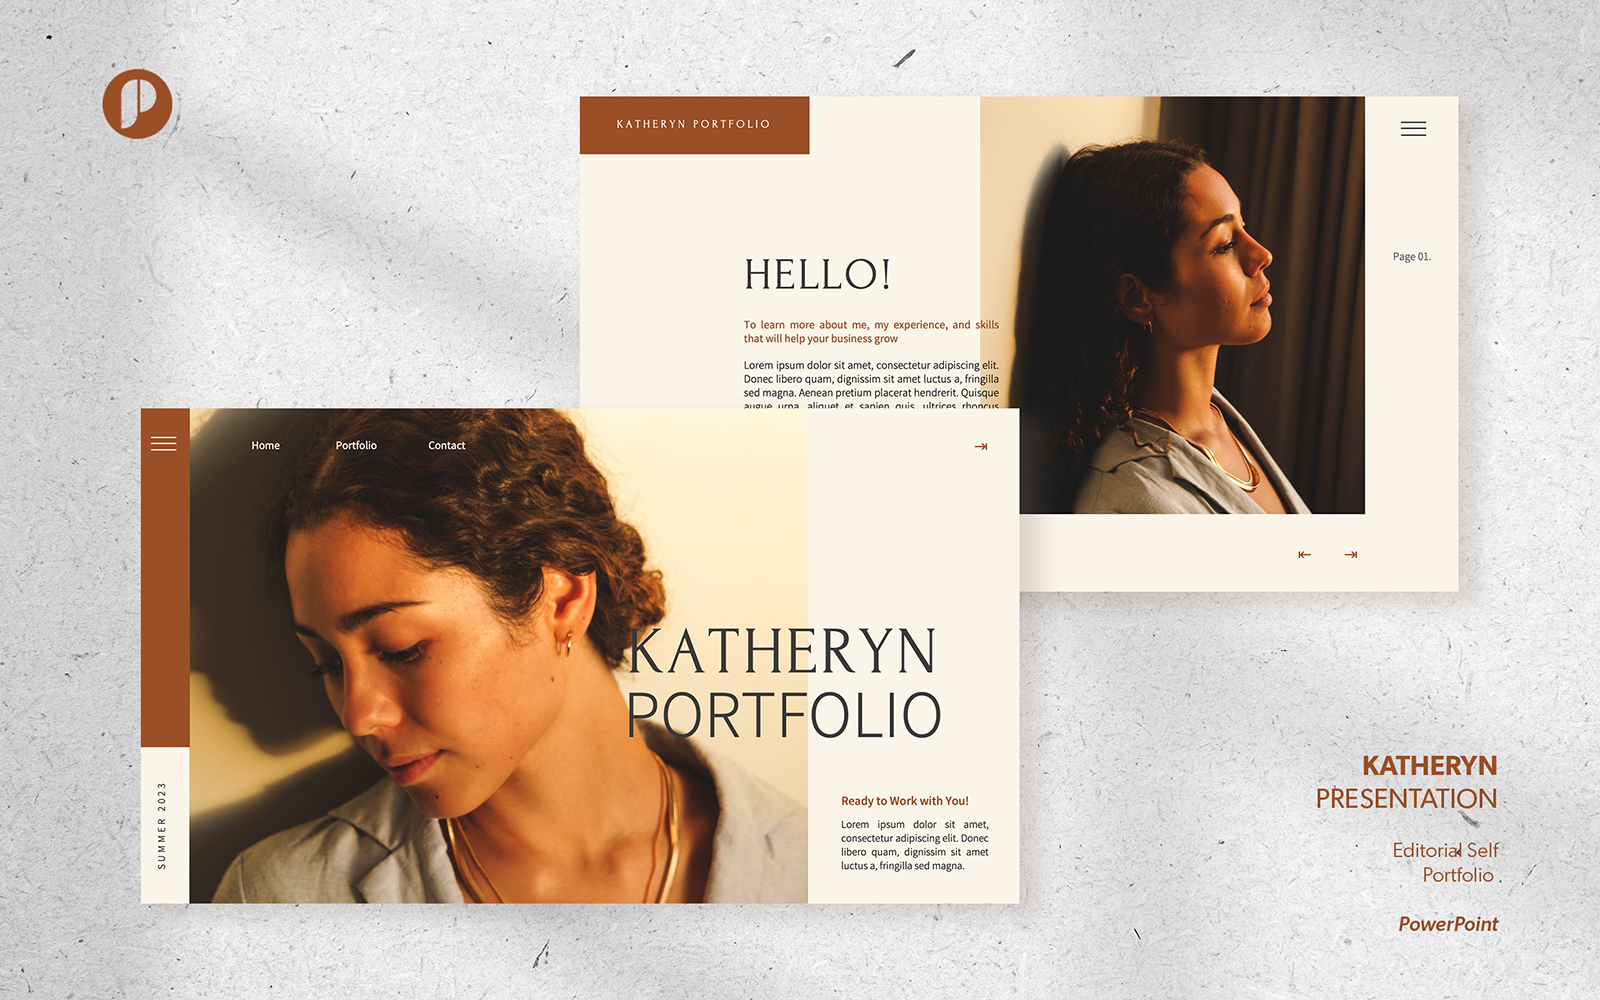 Katheryn – chocolate caramel editorial self-portfolio presentation template